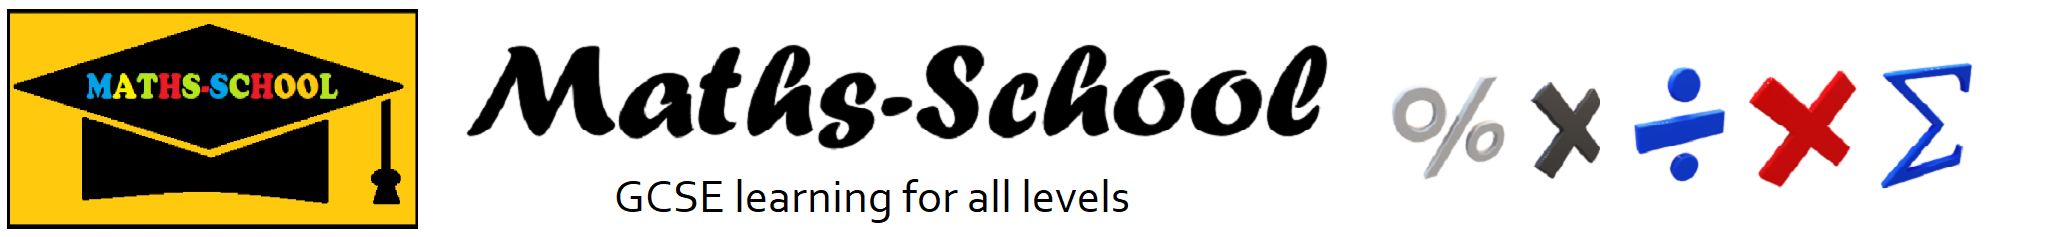 Maths School - Free GCSE Learning site